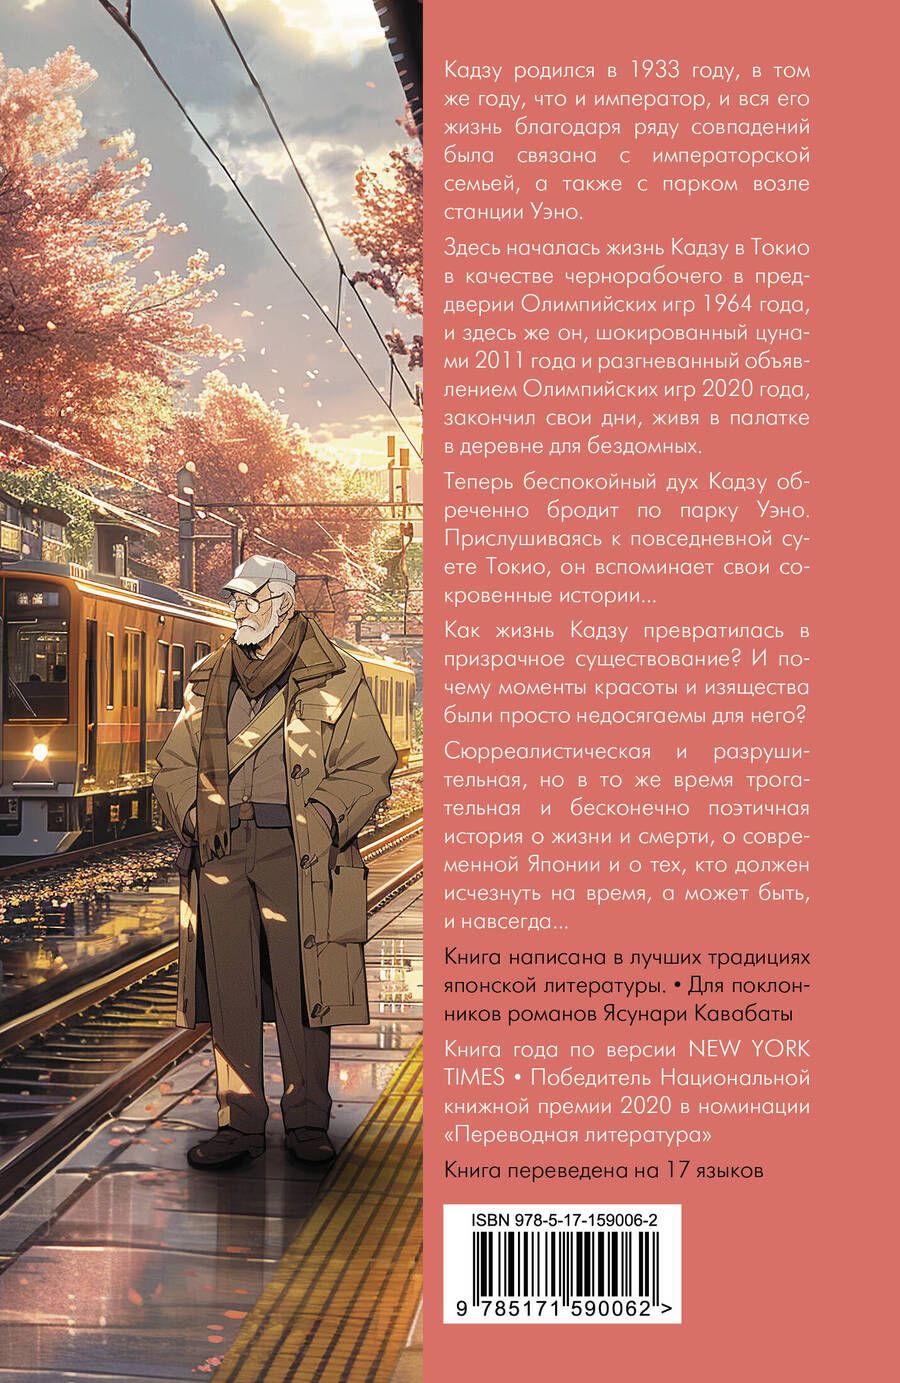 Обложка книги "Ю Мири: Токио. Станция Уэно"